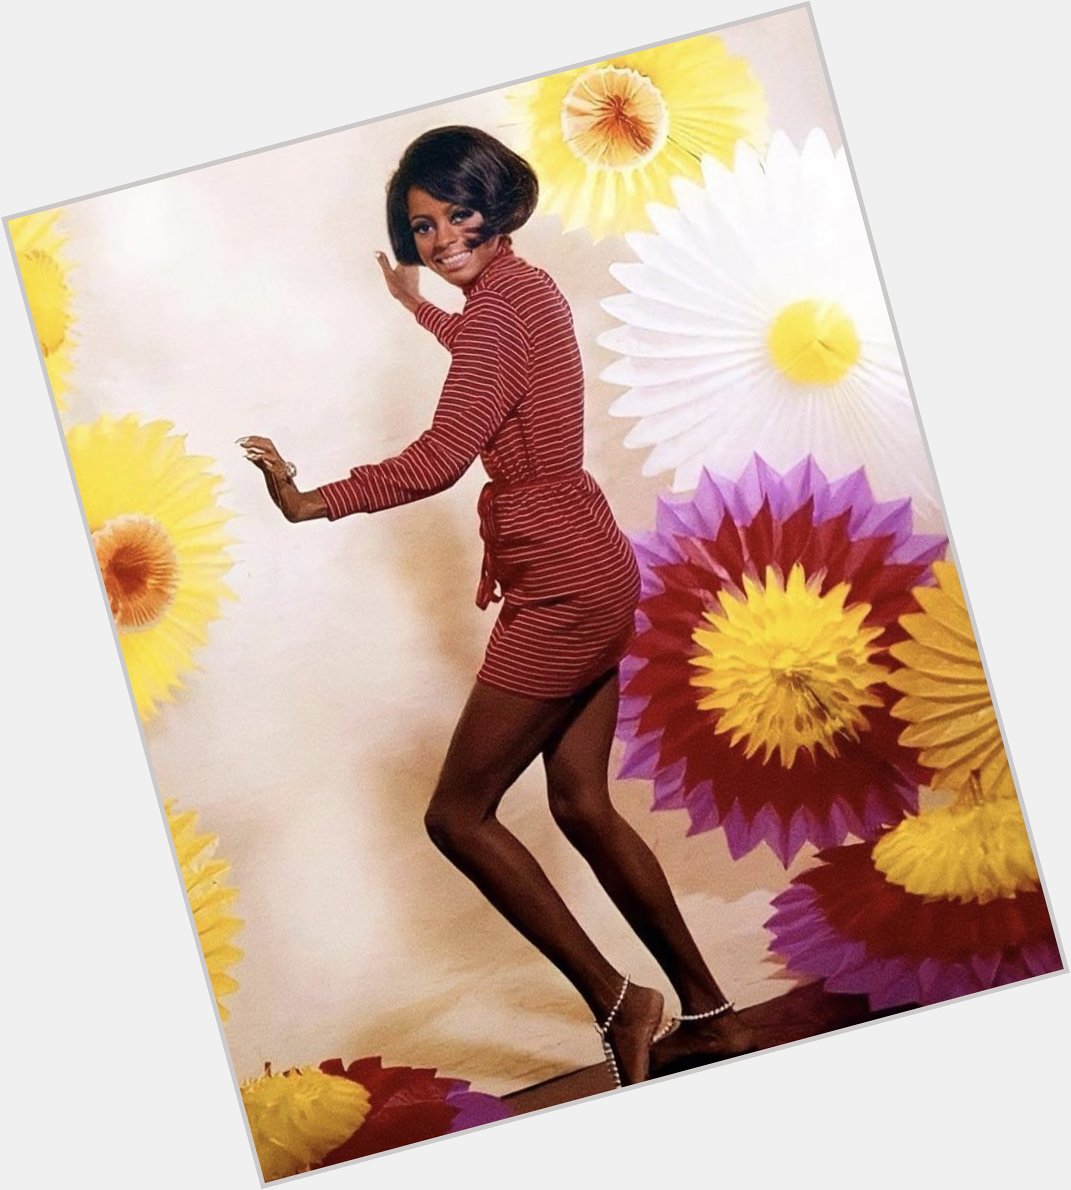 Wishing the Boss, Ms. Diana Ross, a very happy 77th birthday 